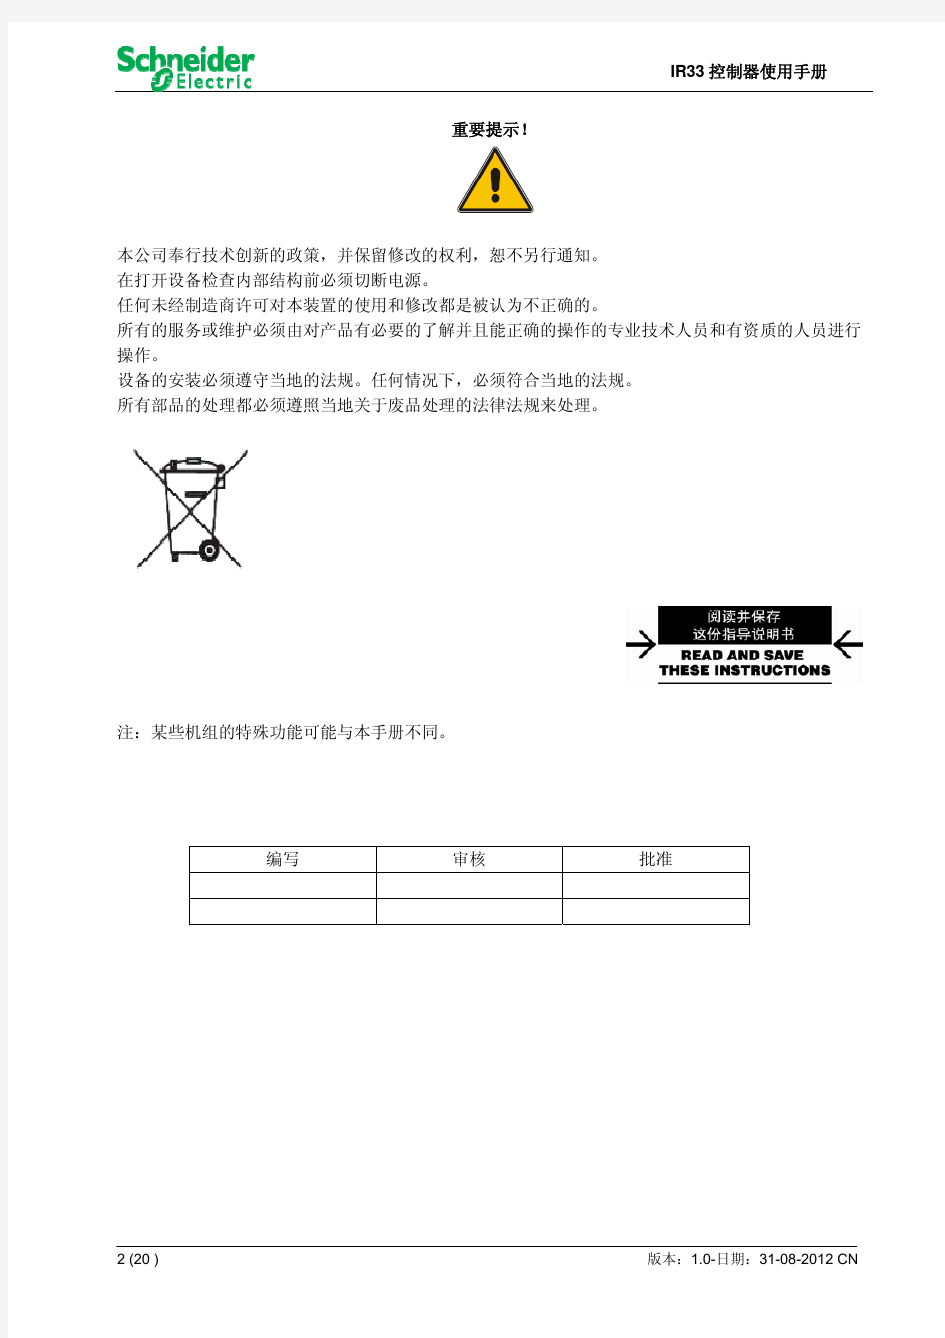 IR33控制器手册(中文版)_06MC043C@13B010